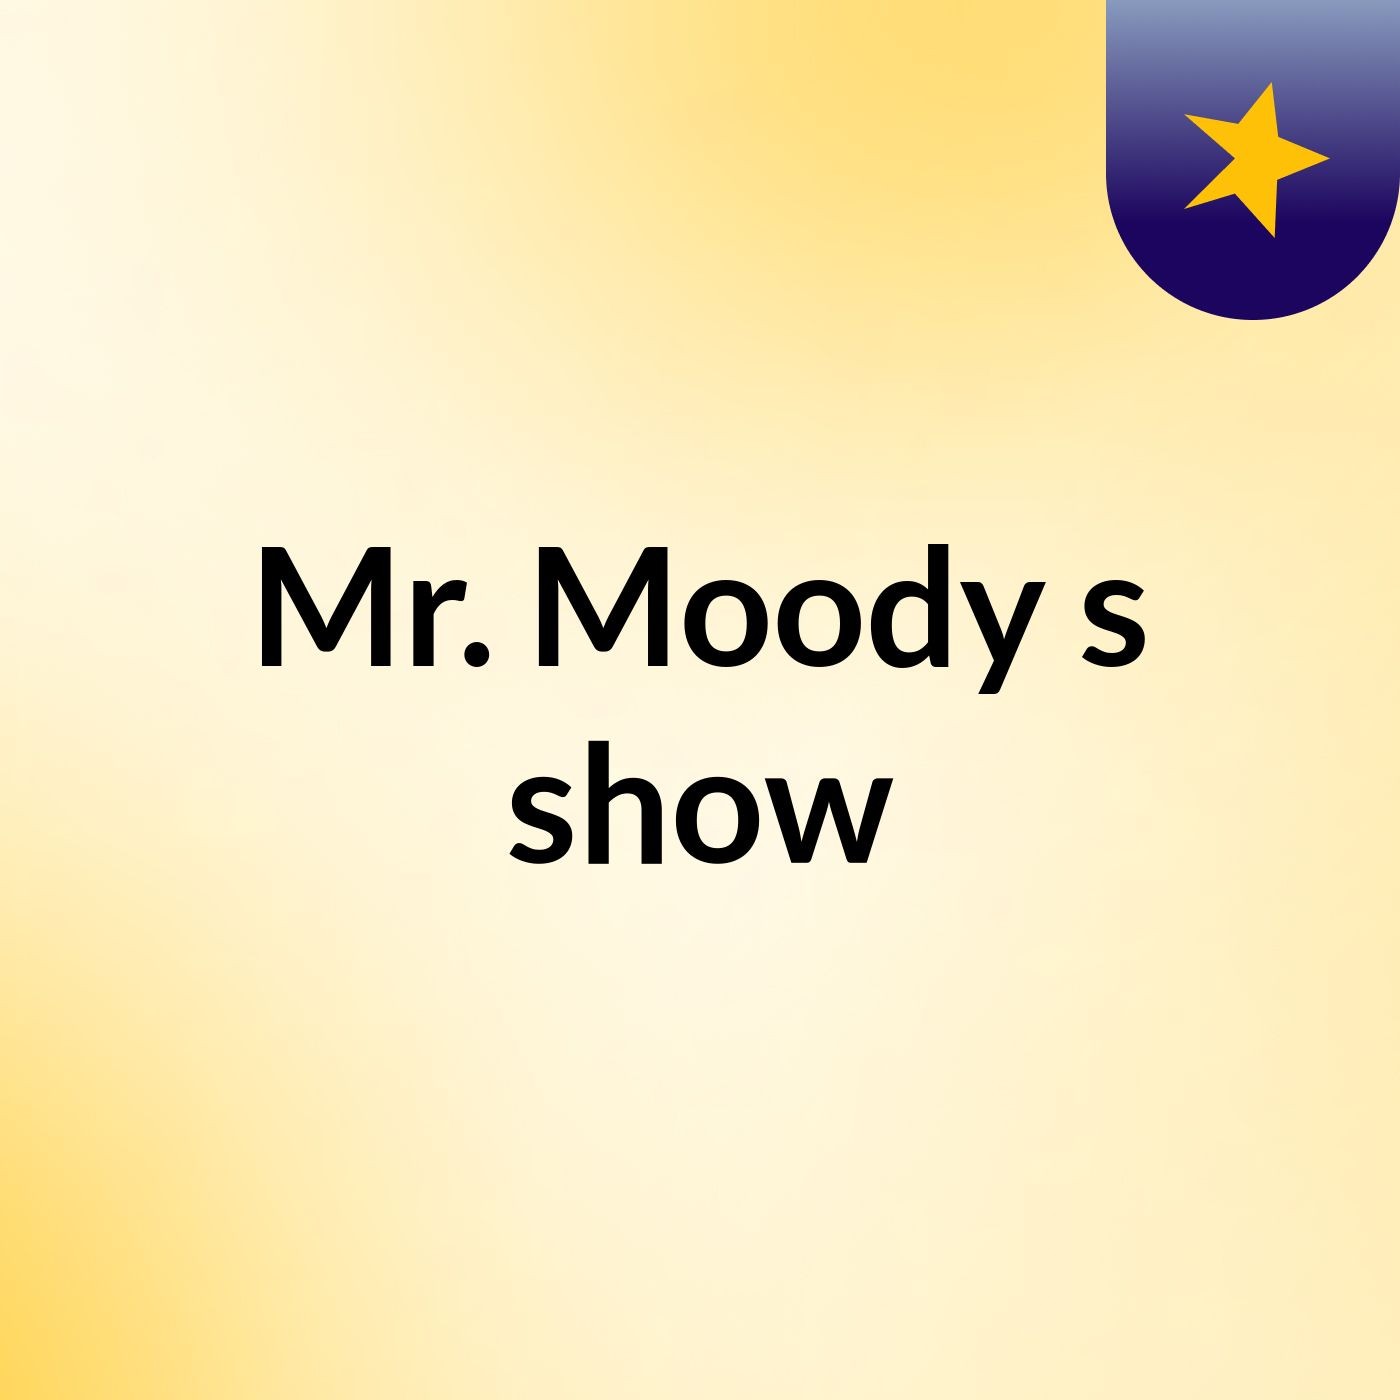 Mr. Moody's show